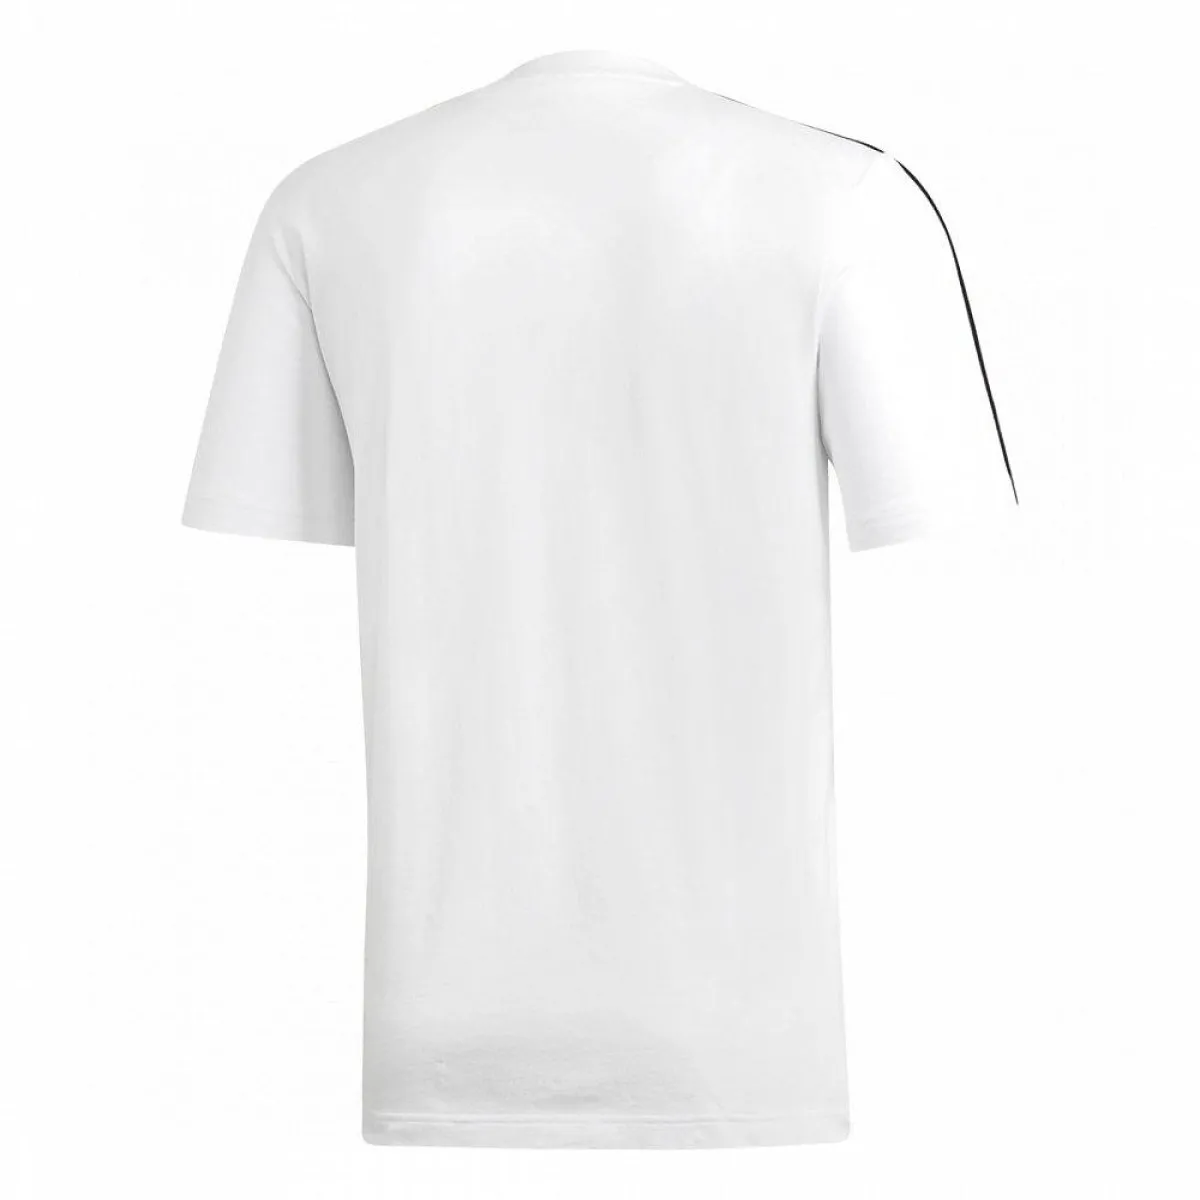 adidas T-shirt white with black shoulder stripes